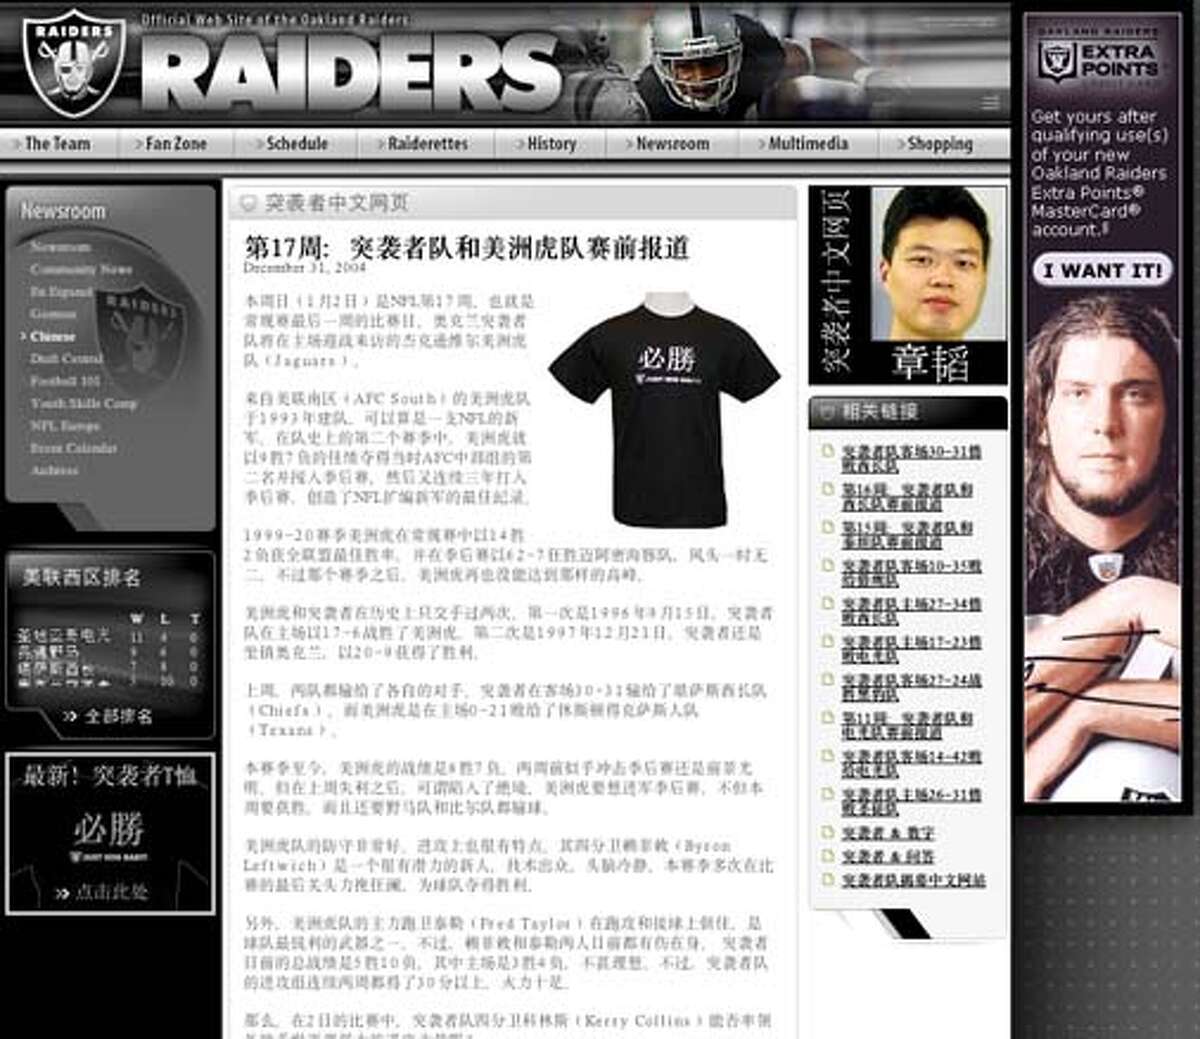 The Chinese Raiders web site.